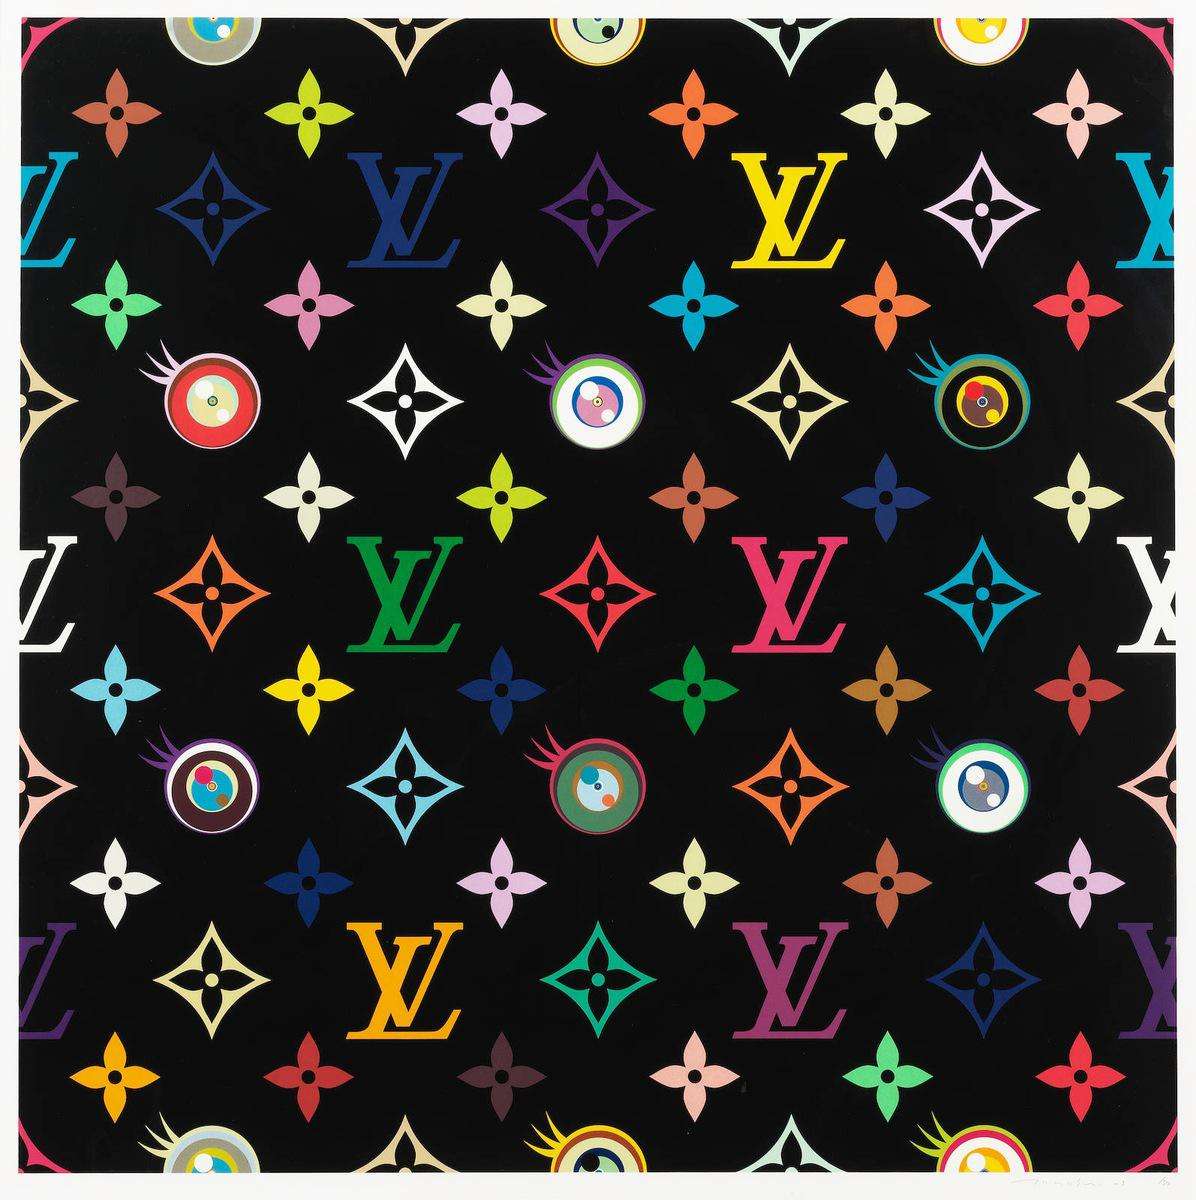 Takashi Murakami x Louis Vuitton inspired set 🍒 inspo also from